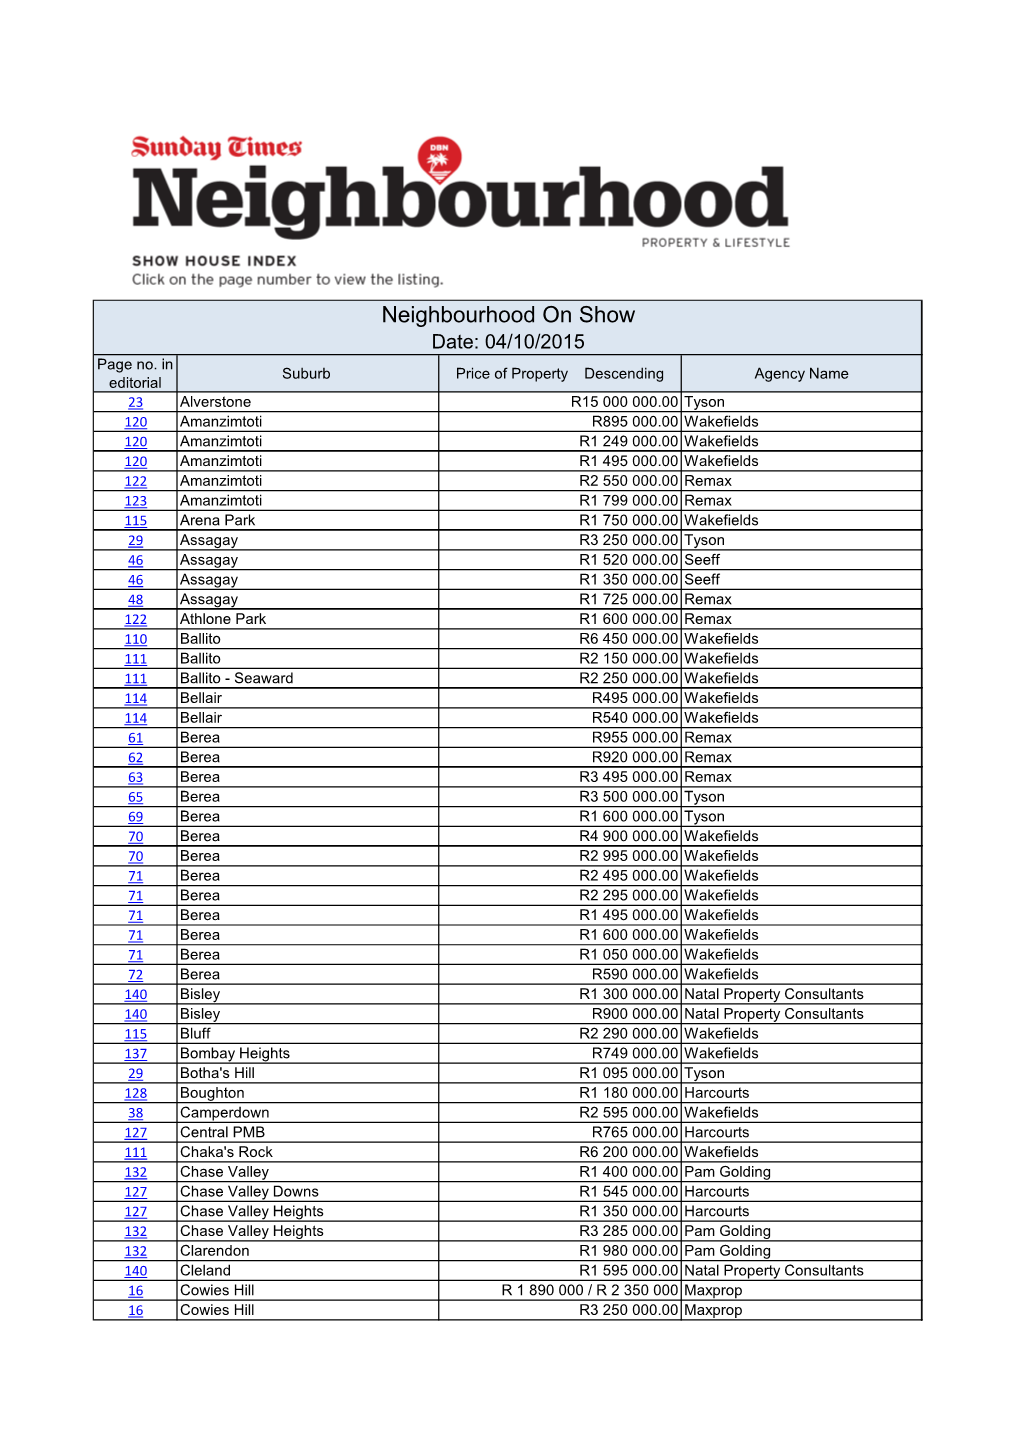 Neighbourhood on Show Date: 04/10/2015 Page No